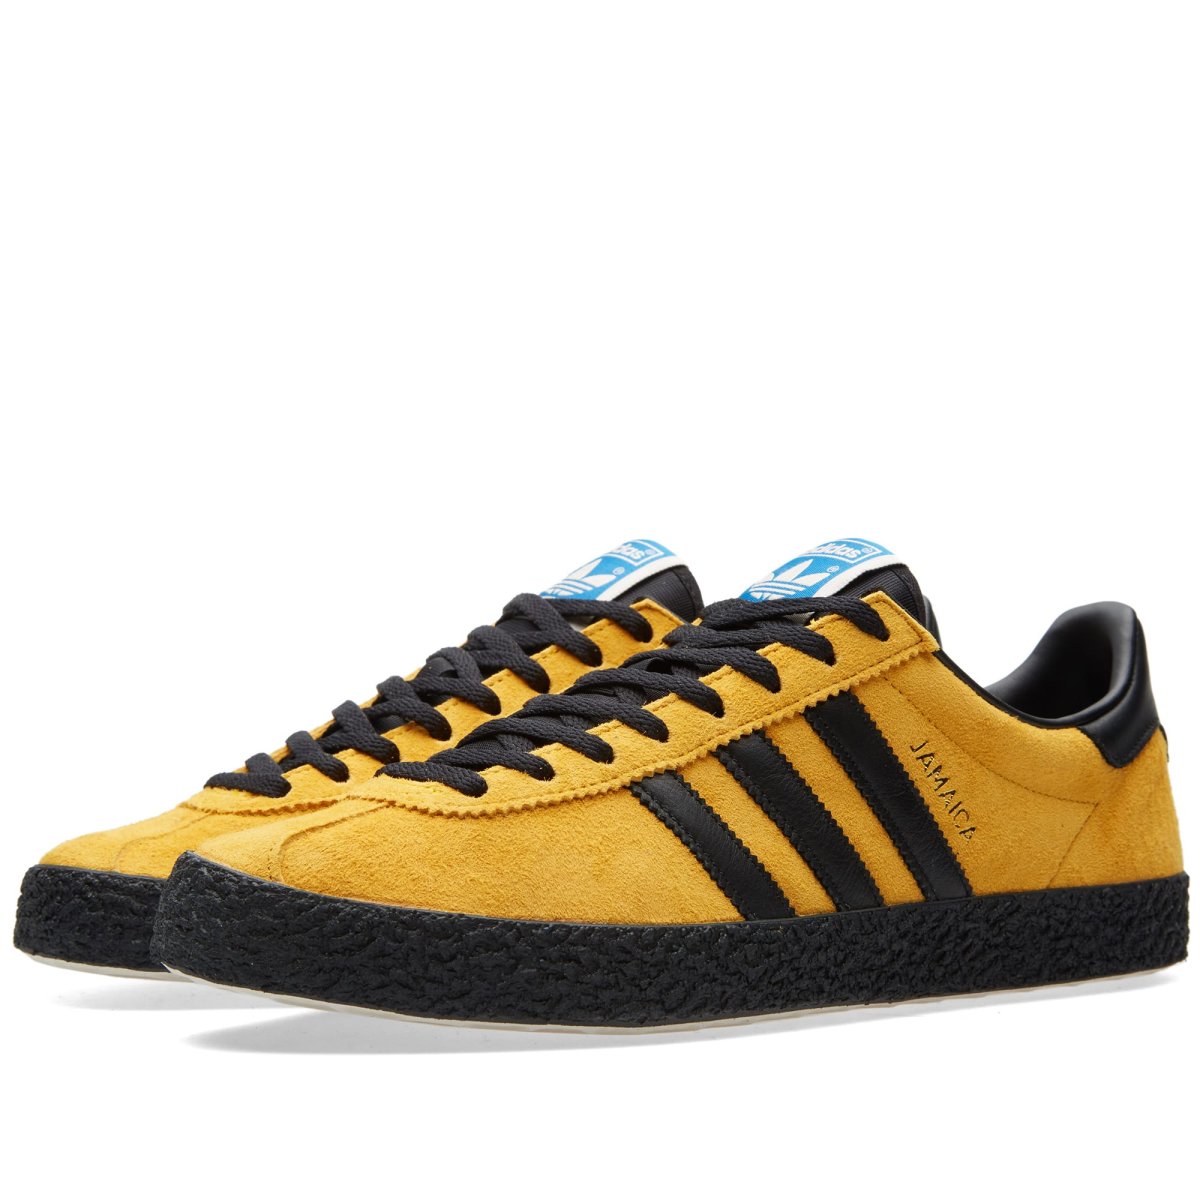 Adidas Jamaica b26386